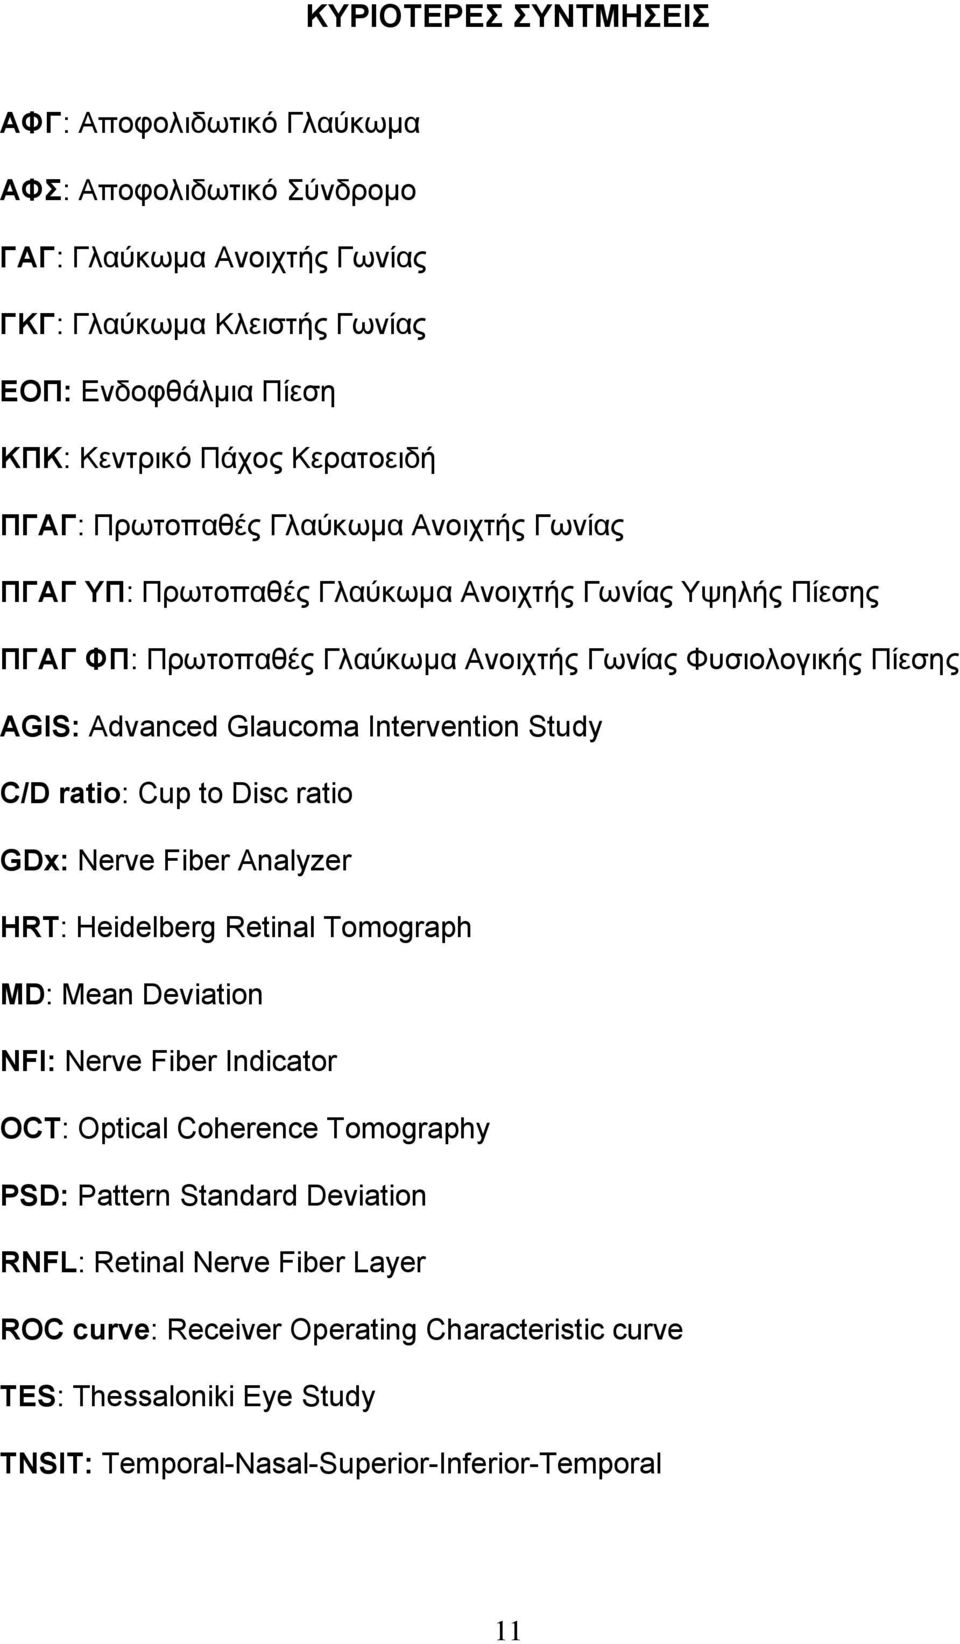 Advanced Glaucoma Intervention Study C/D ratio: Cup to Disc ratio GDx: Nerve Fiber Analyzer HRT: Heidelberg Retinal Tomograph MD: Mean Deviation NFI: Nerve Fiber Indicator OCT: Optical